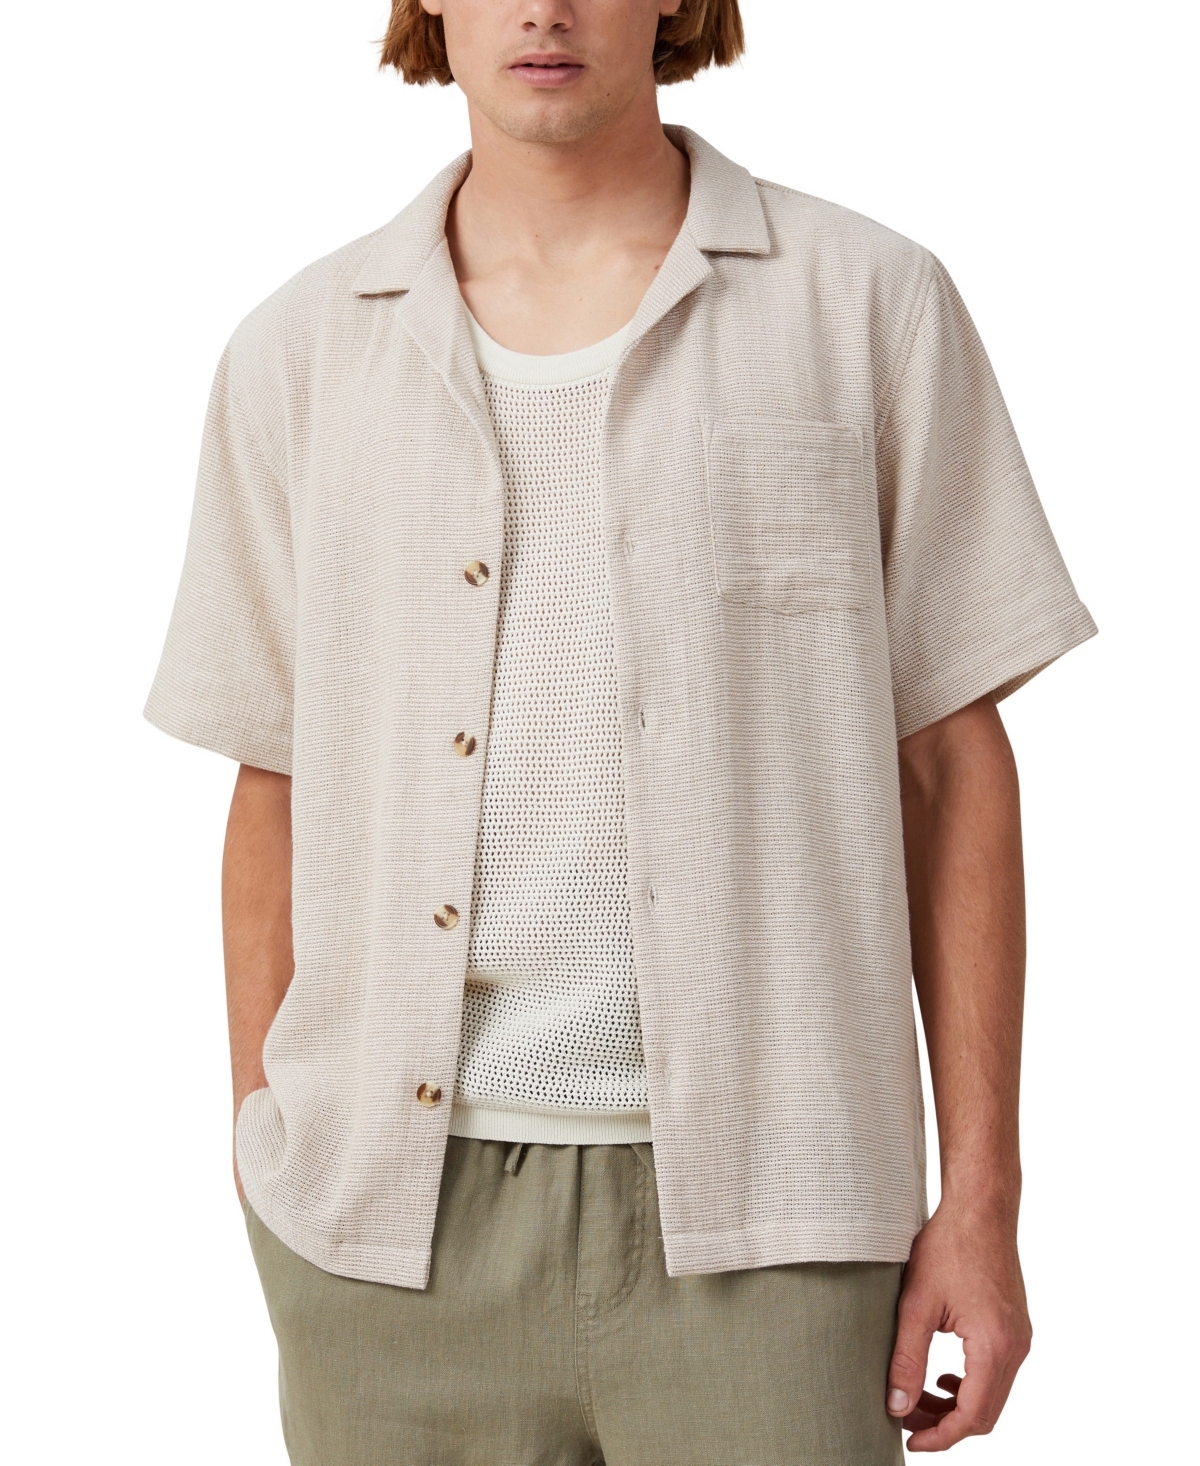 Cotton On Men's Palma Short Sleeve Shirt In Ecru